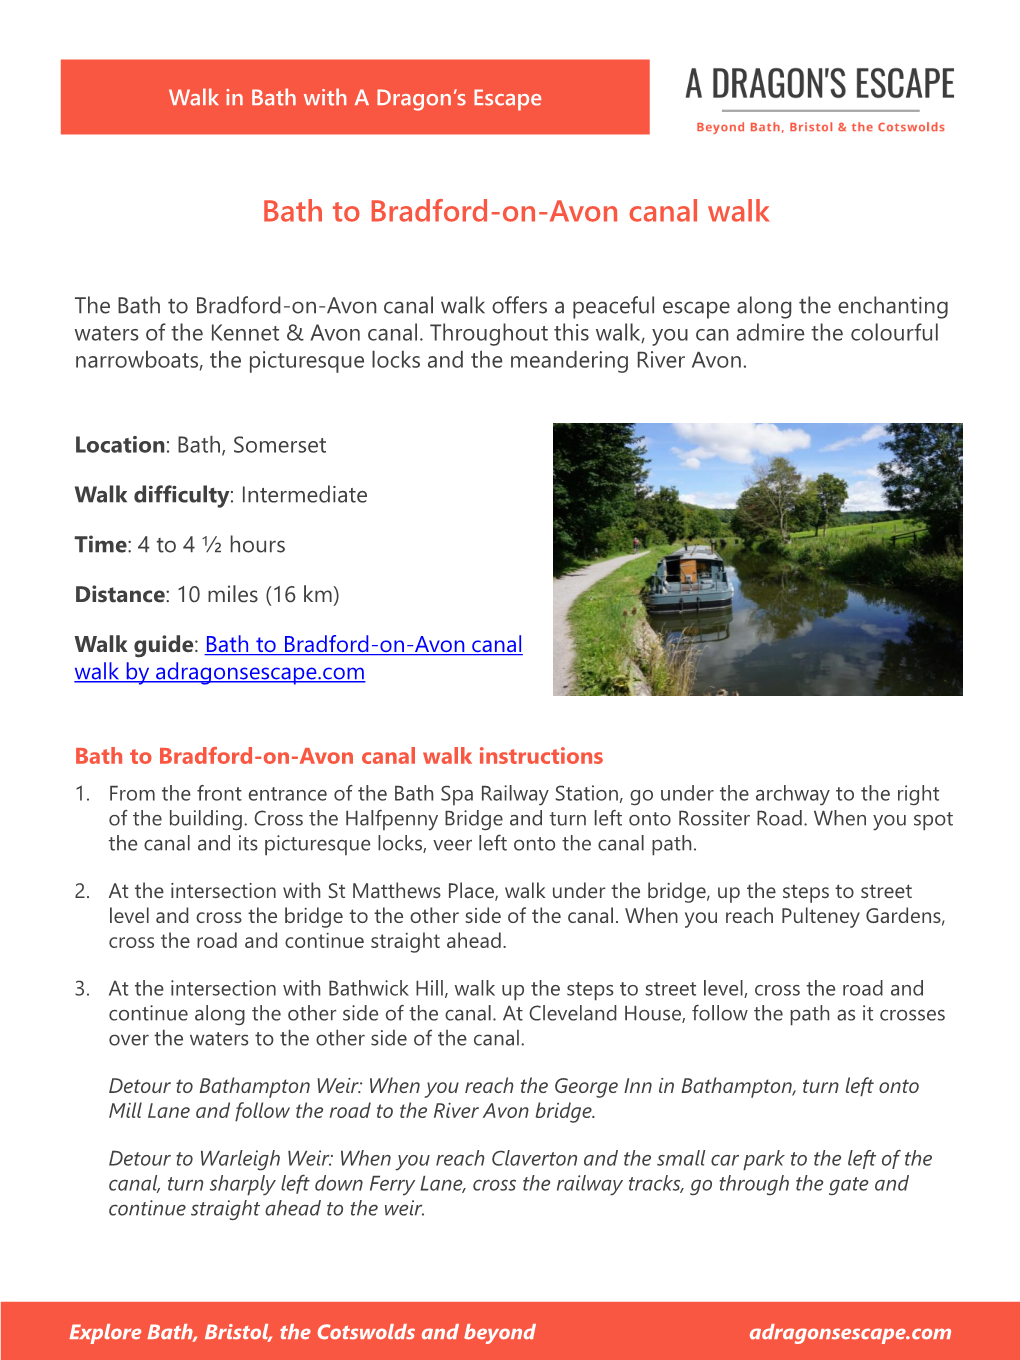 Bath to Bradford-On-Avon Canal Walk